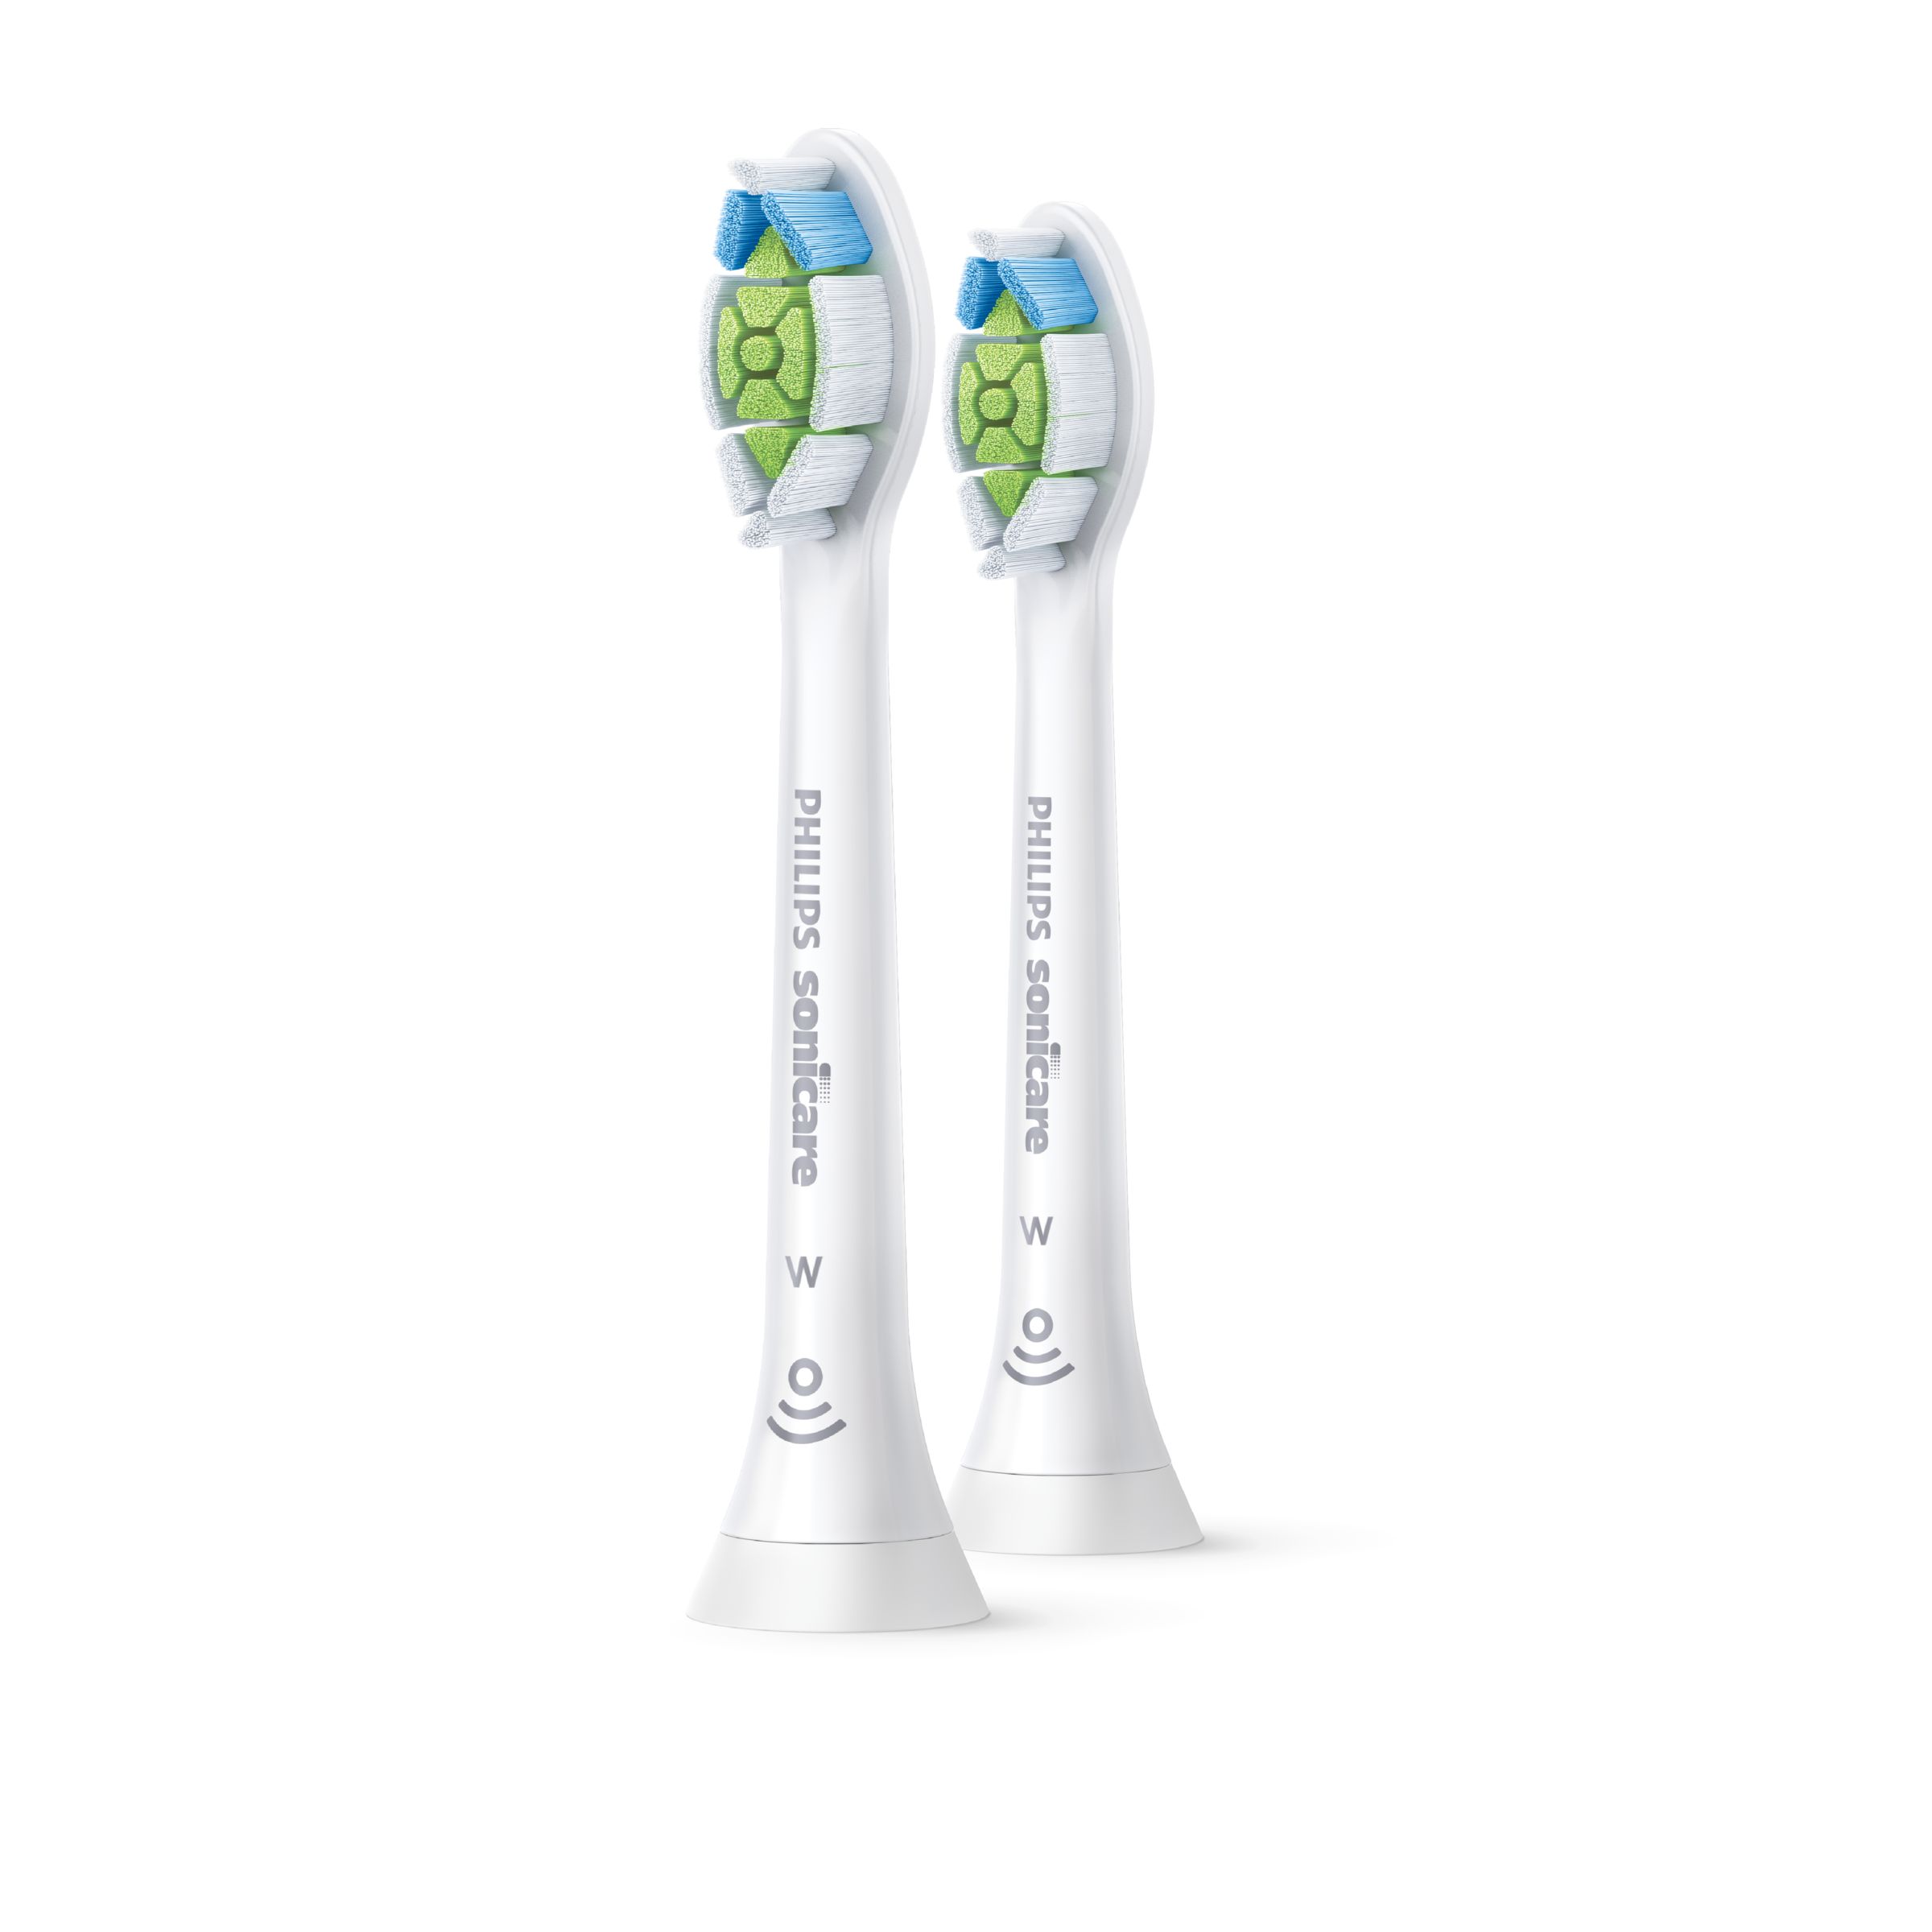 Image of Philips W DiamondClean - Standard sonic toothbrush heads - HX6062/92